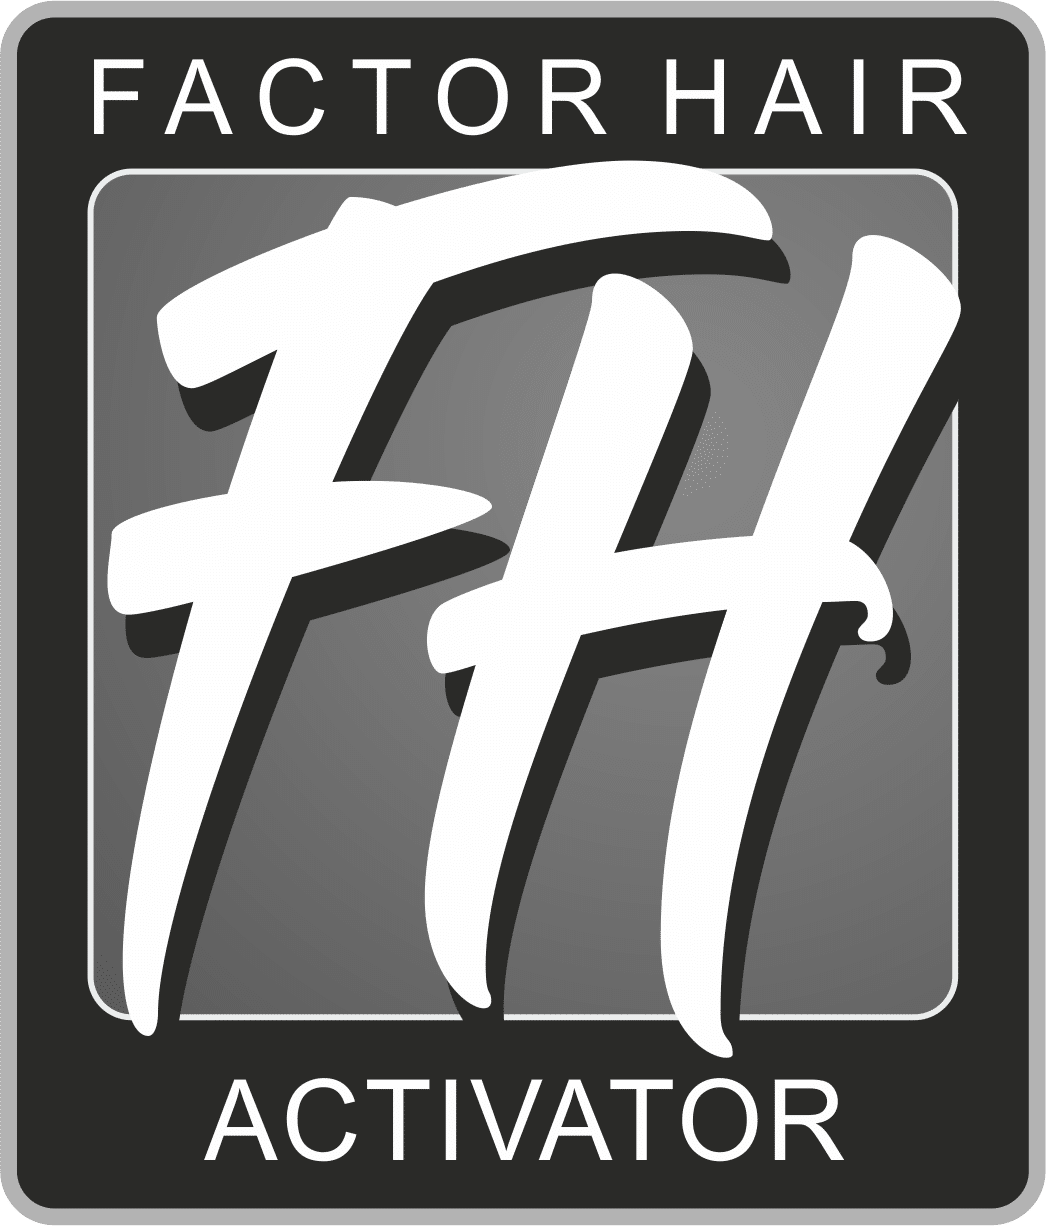 Get More Special Offer At Factor Hair de